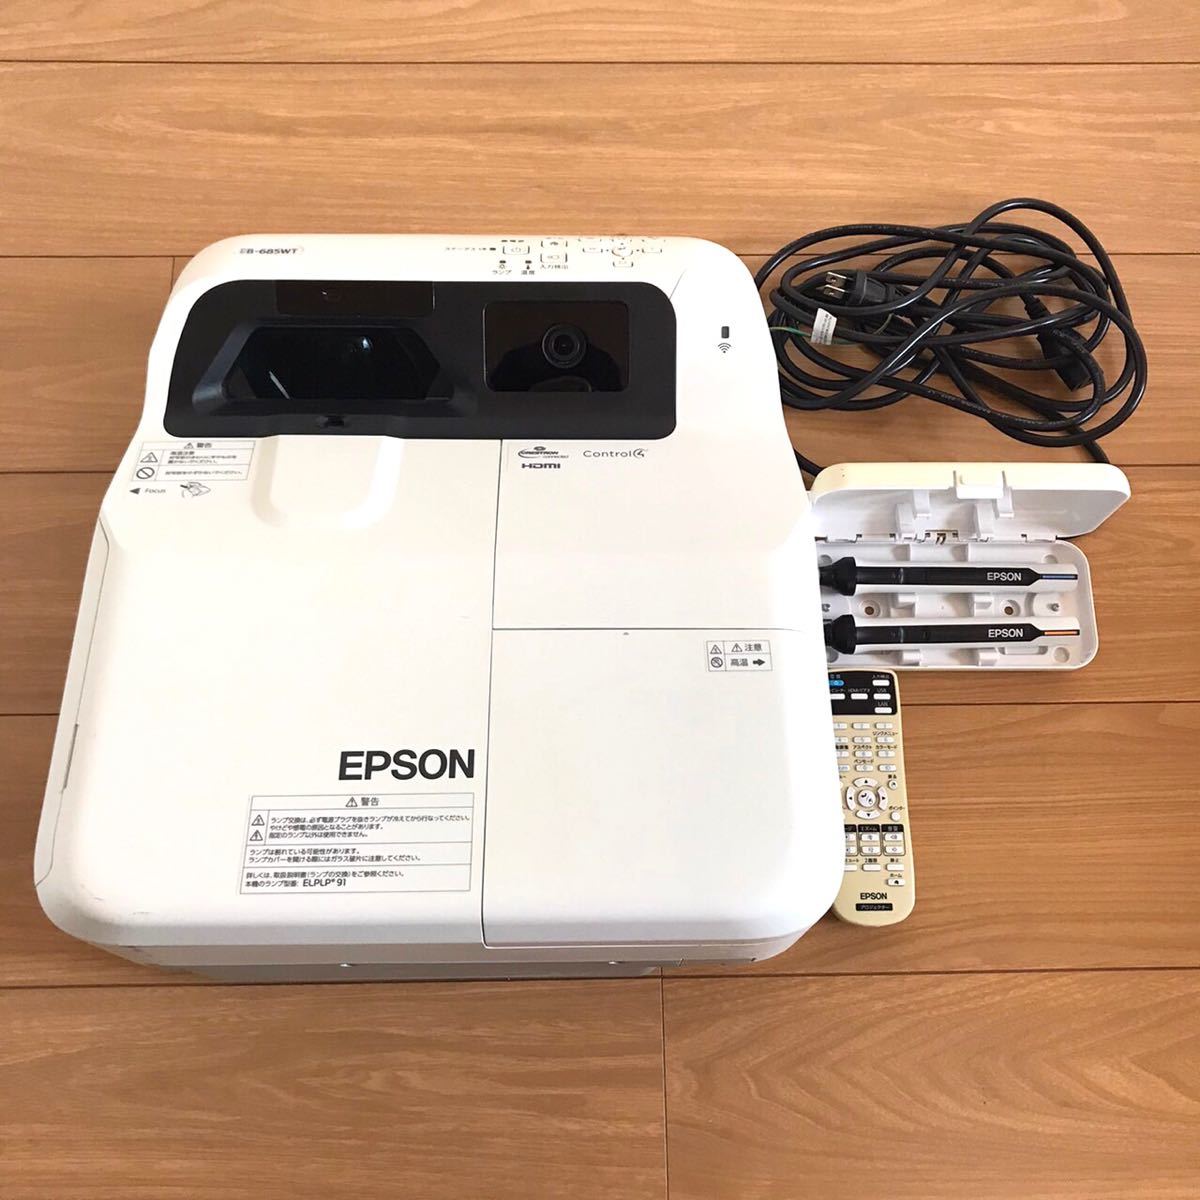 EPSON 超単焦点 プロジェクター EB-590WT ランプ時間1425 - nasdenas.com